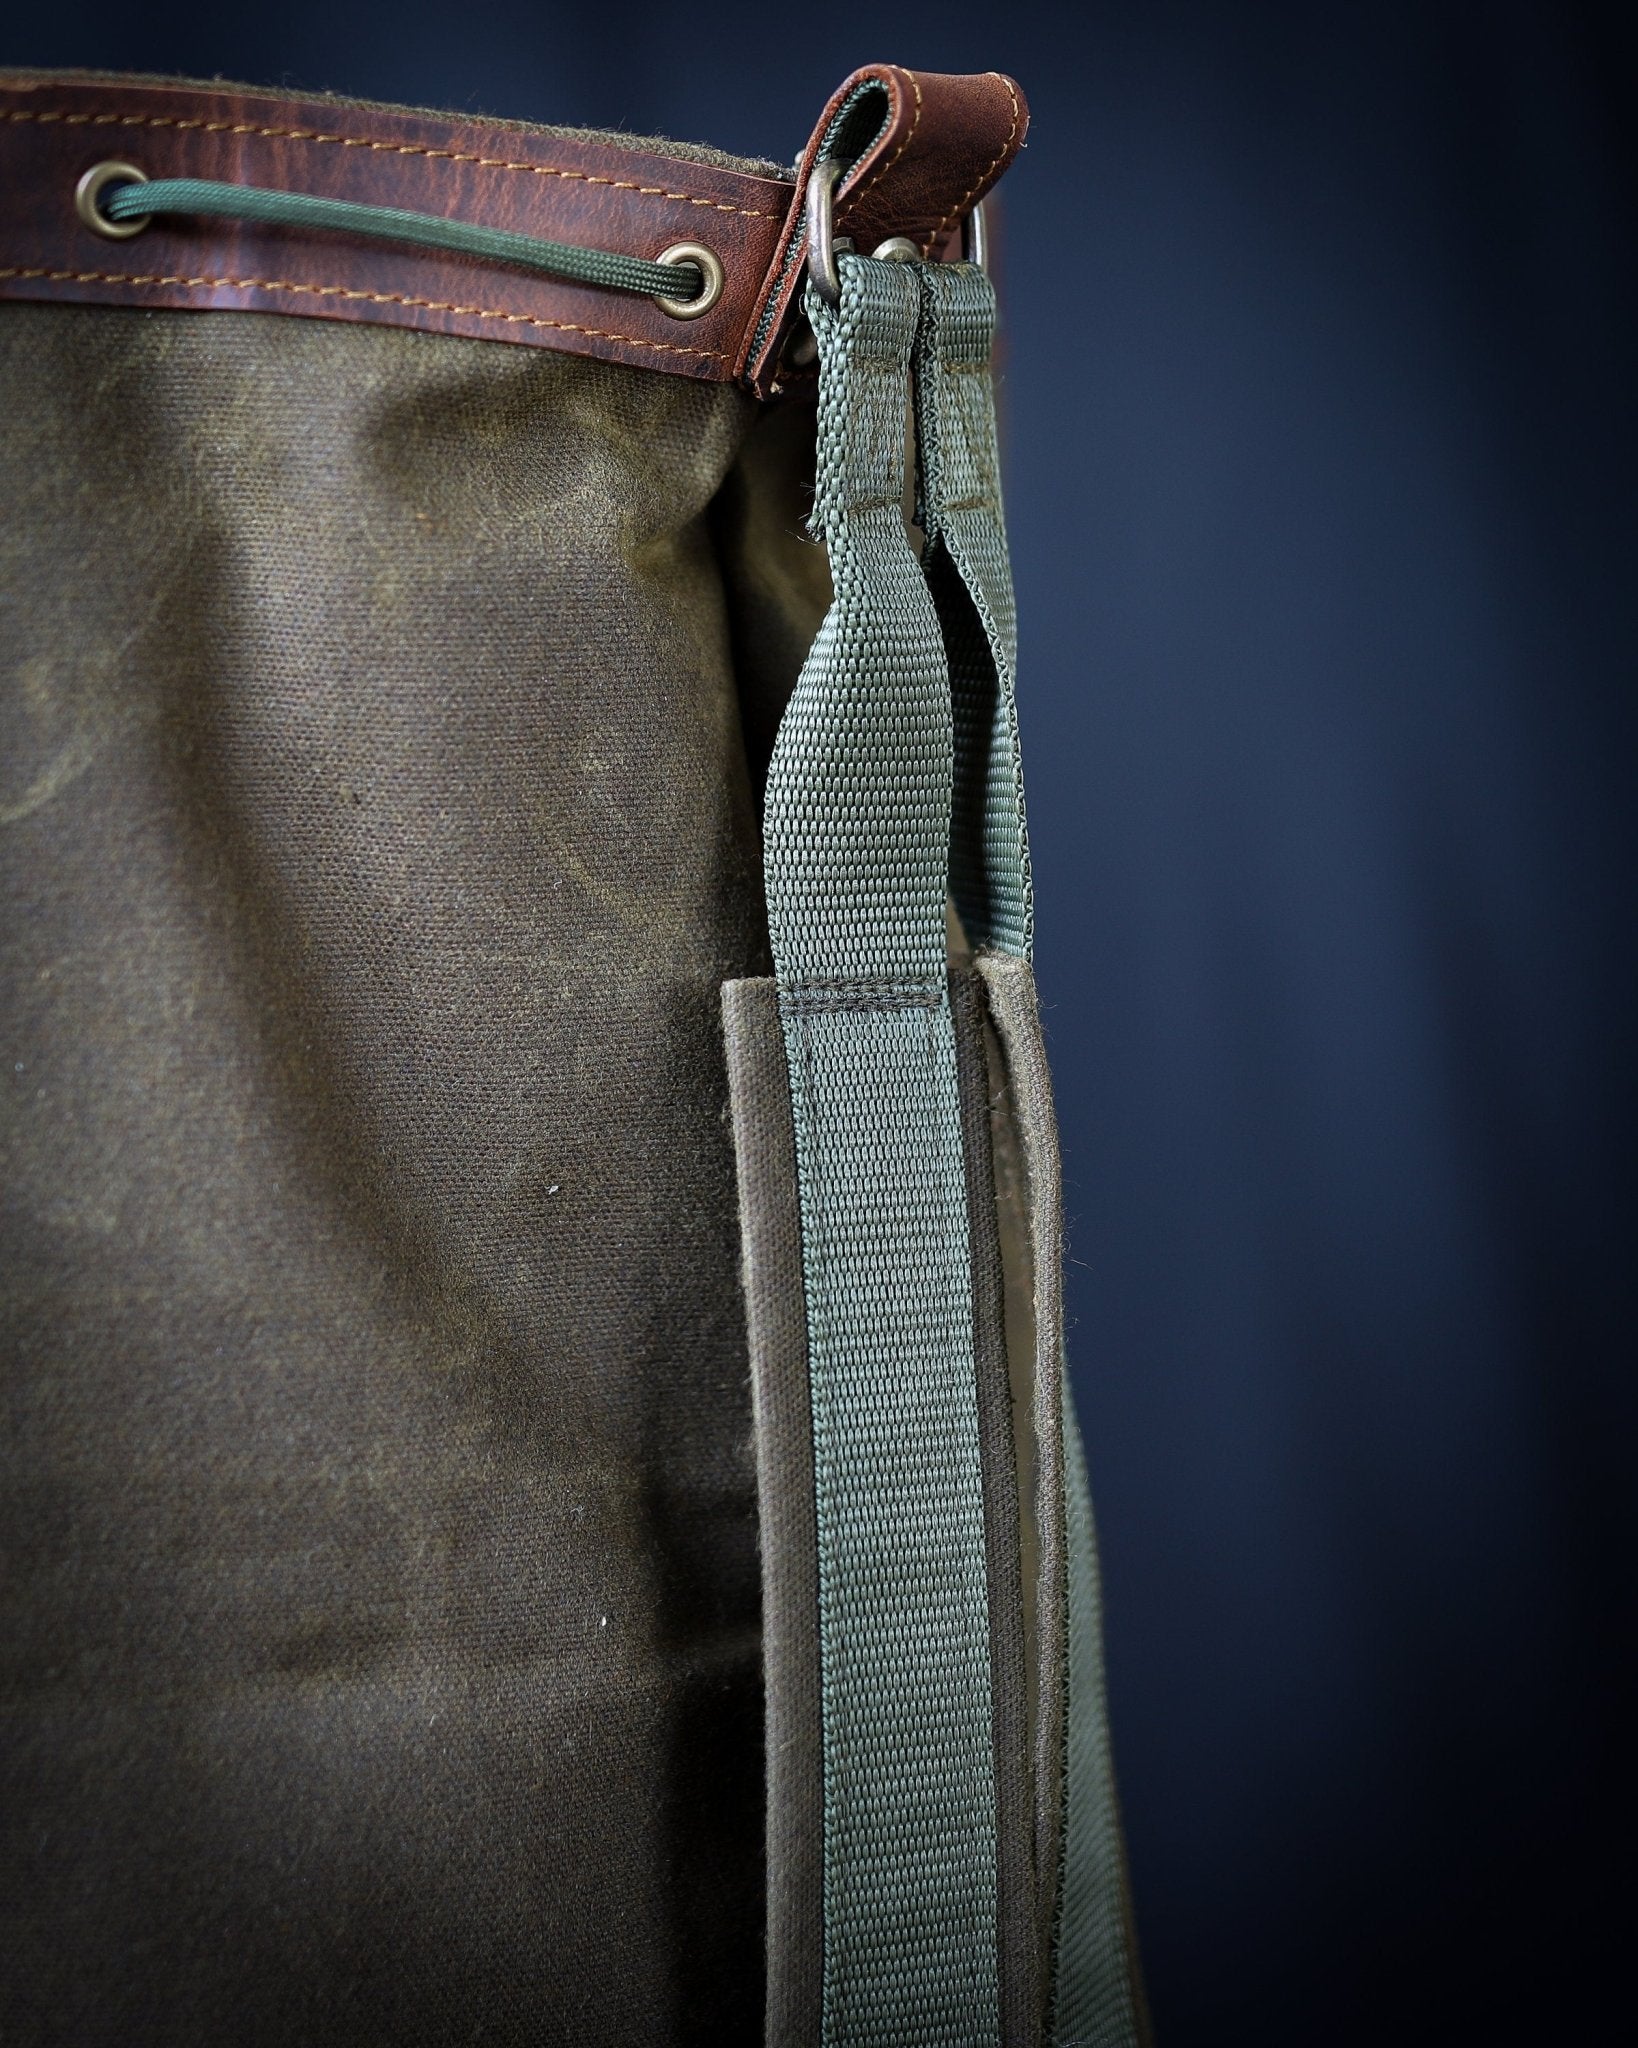 WW2 German Canvas Bag Pouch For Off Season Cloths